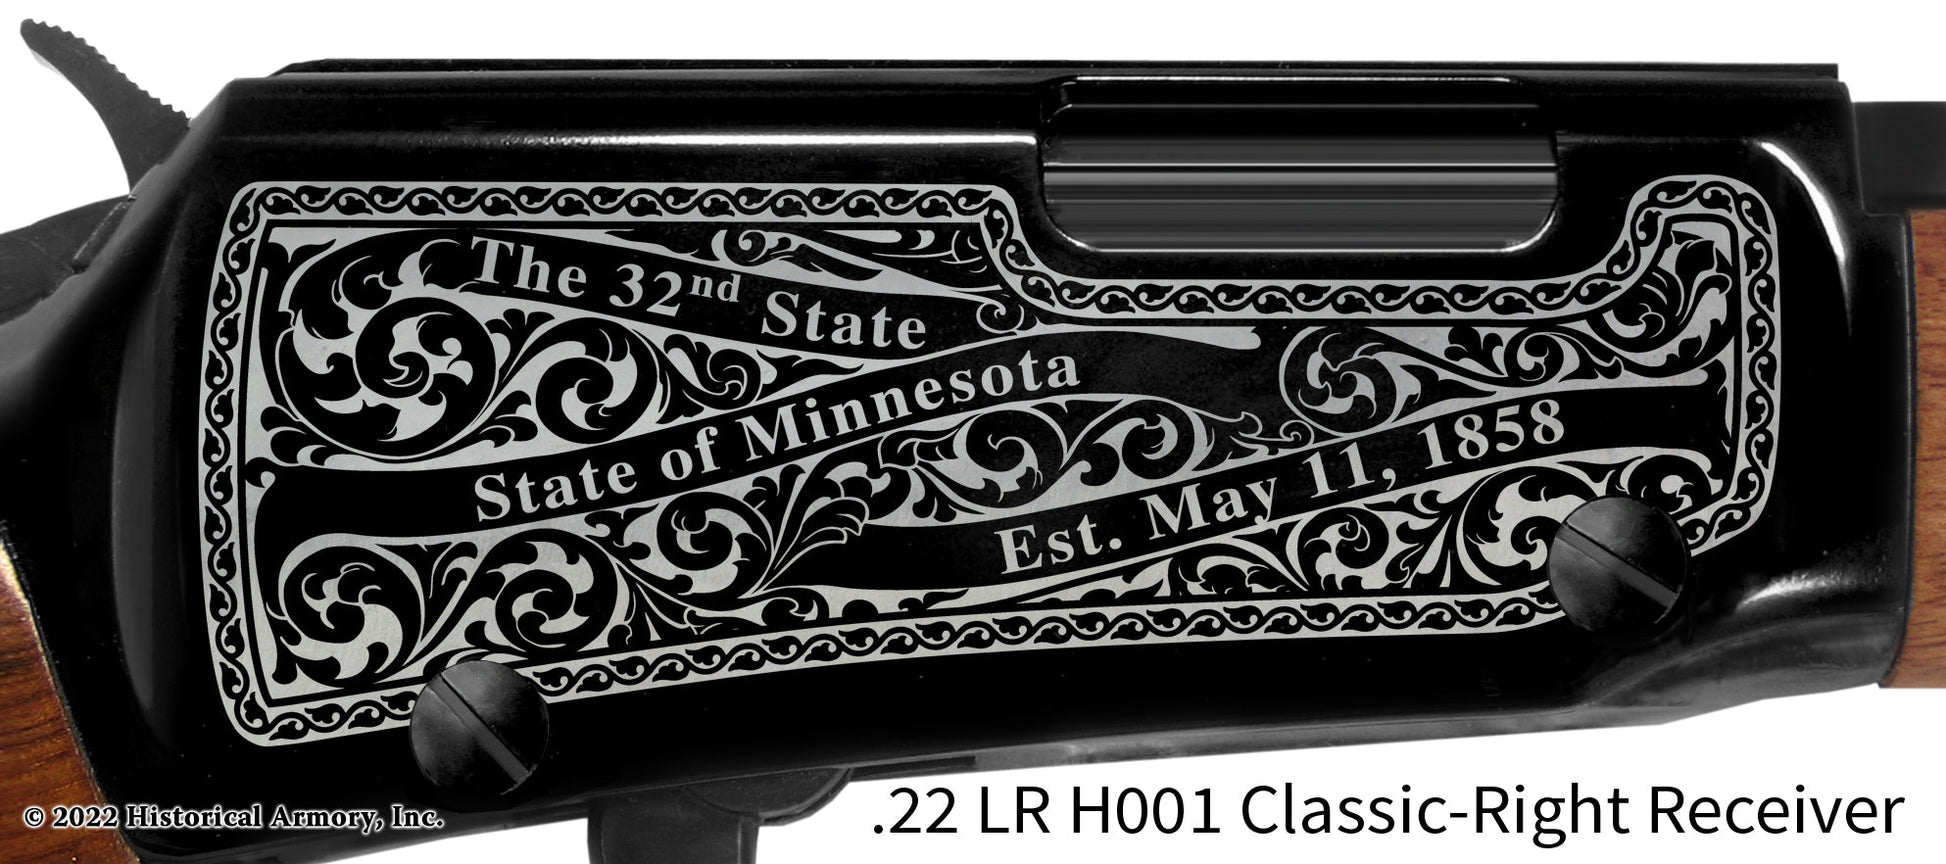 Cottonwood County Minnesota Engraved Henry H001 Rifle